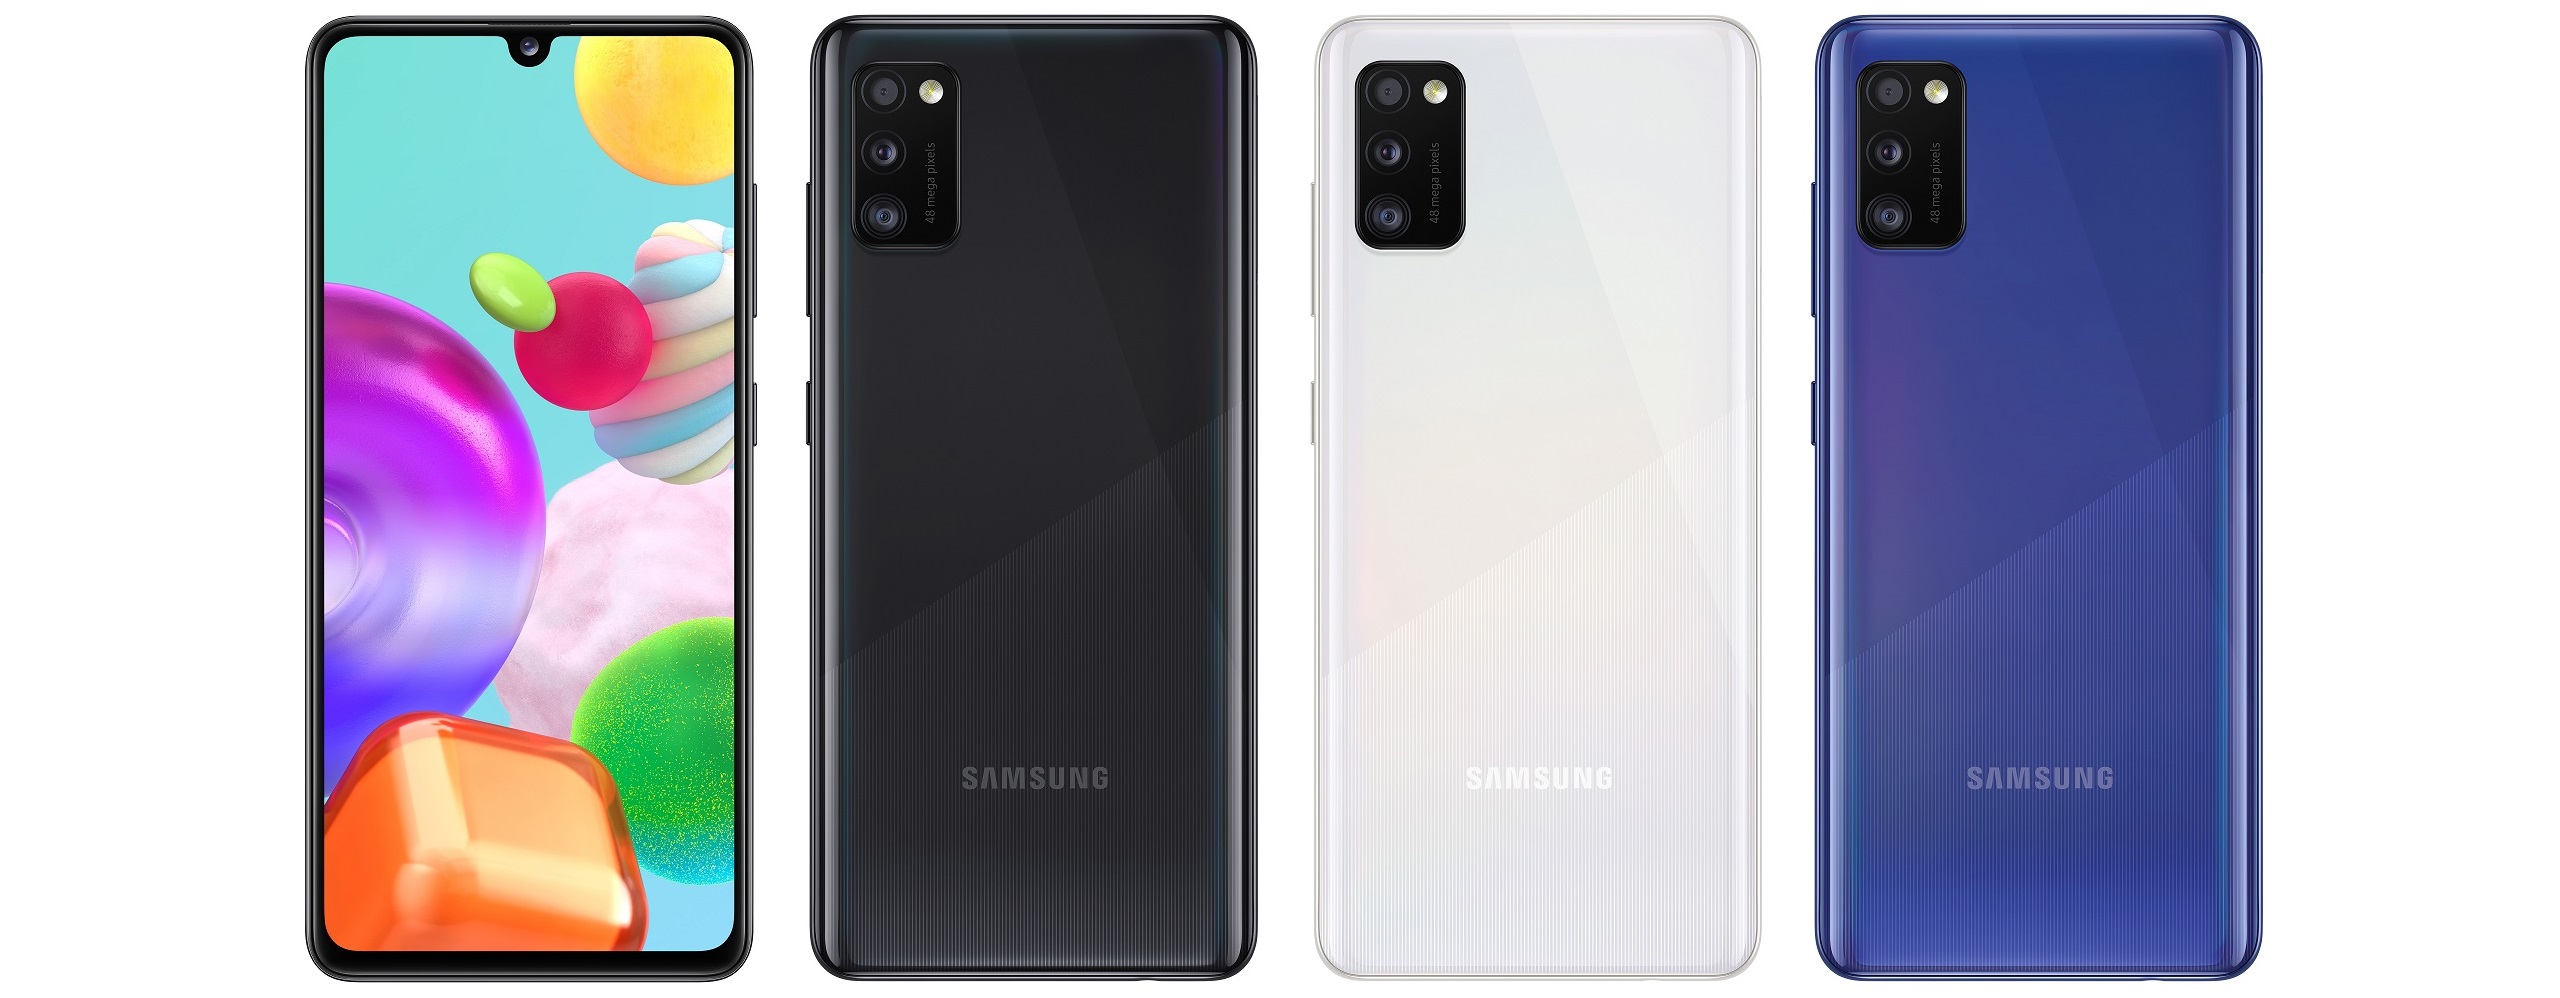 Samsung Galaxy A41 smartphone